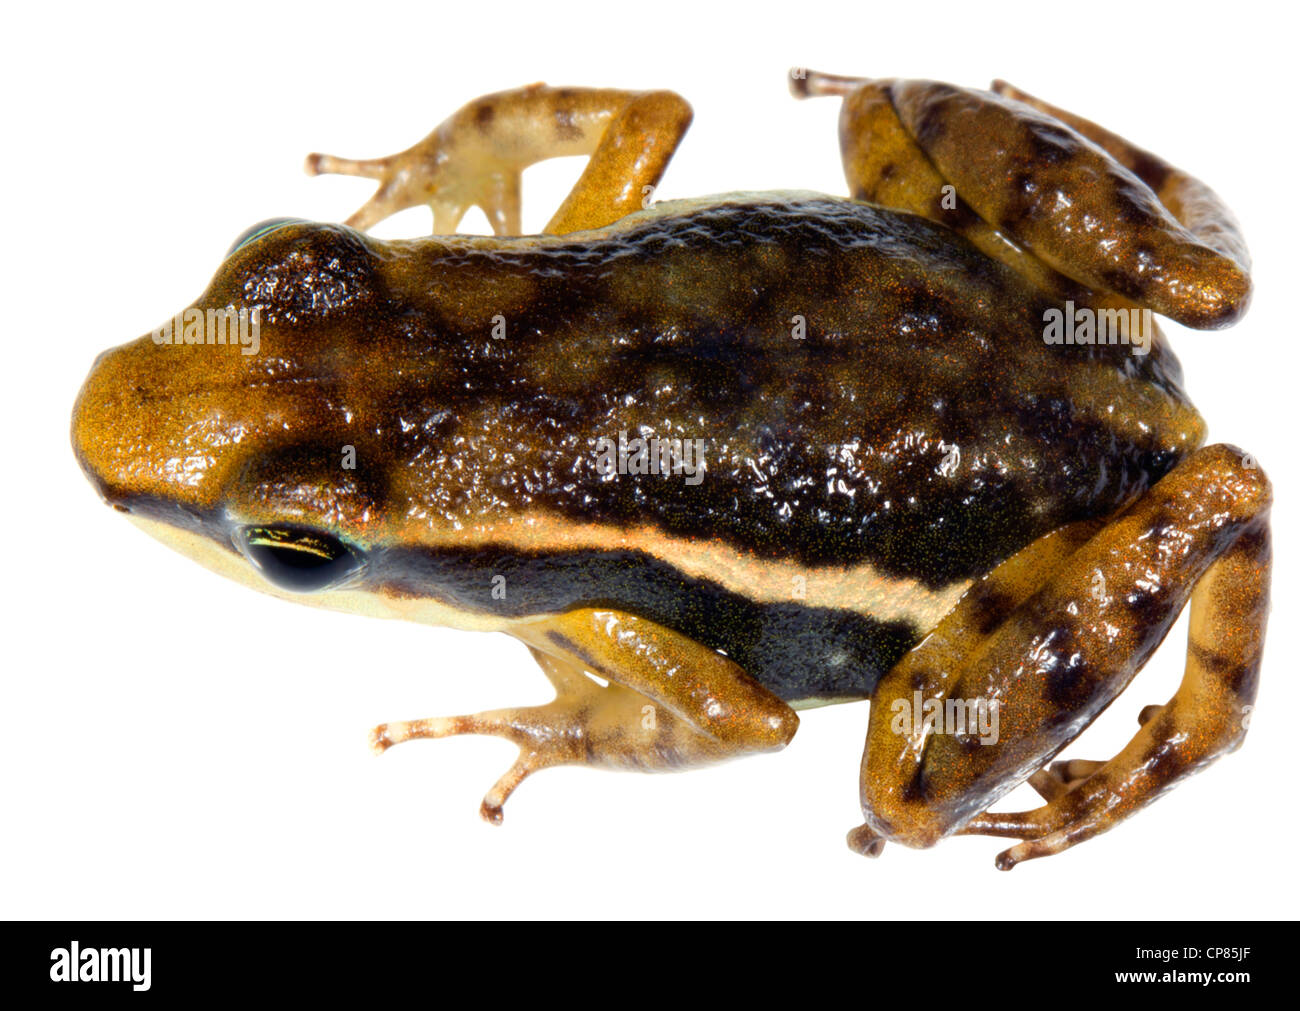 Machalilla Poison Frog (Epipedobates machallila) from western Ecuador Stock Photo